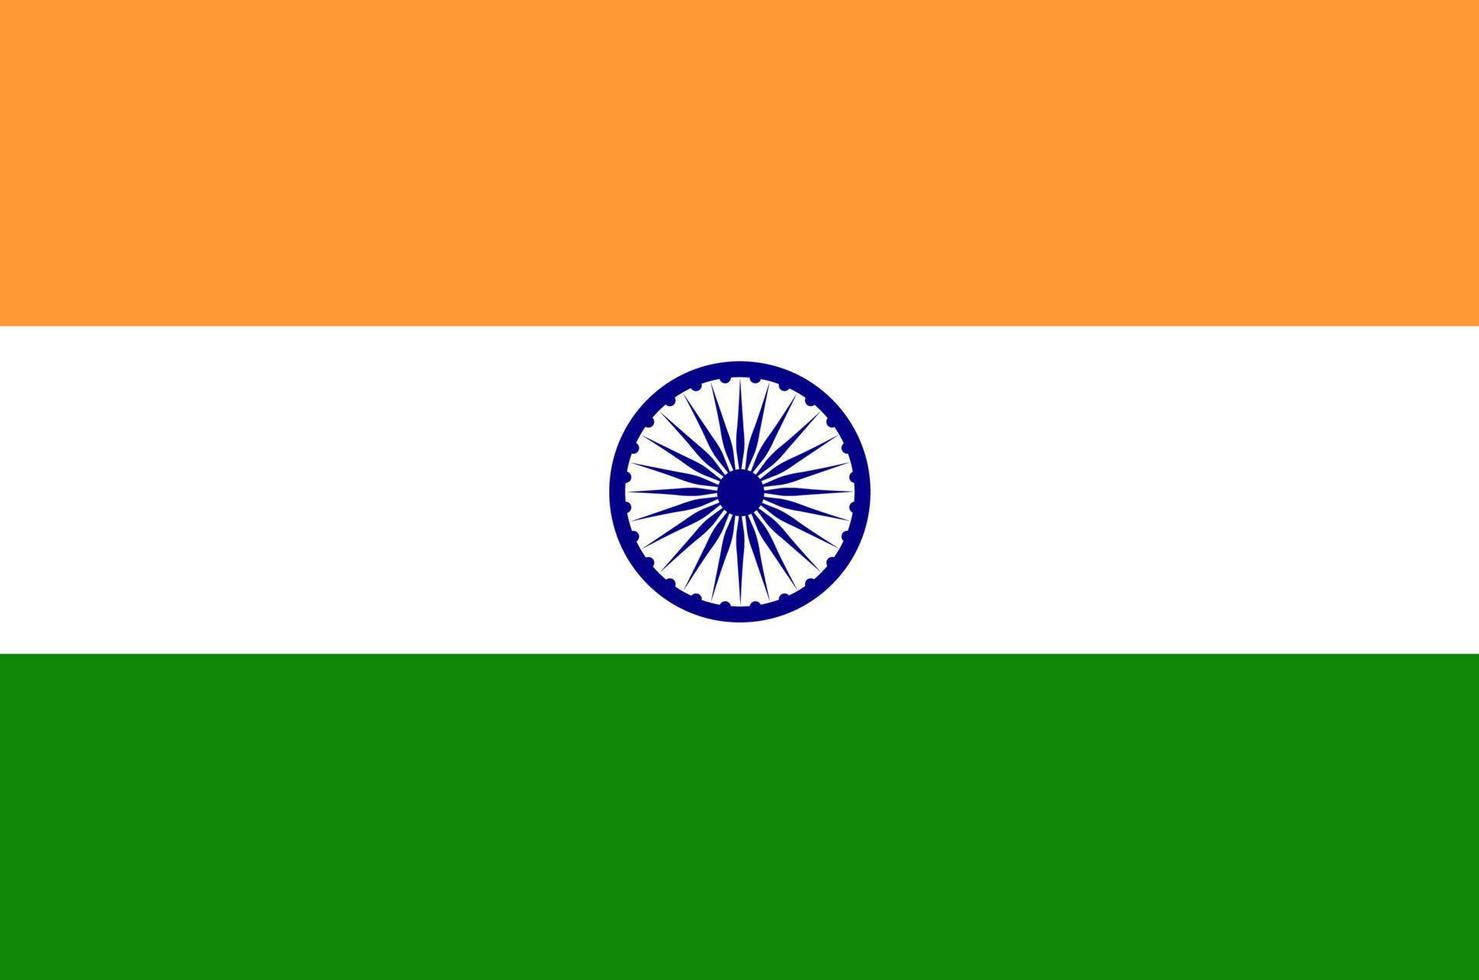 Flagge Indiens. Offizielle Proportionsmaße und Farben. Vektor-Illustration vektor